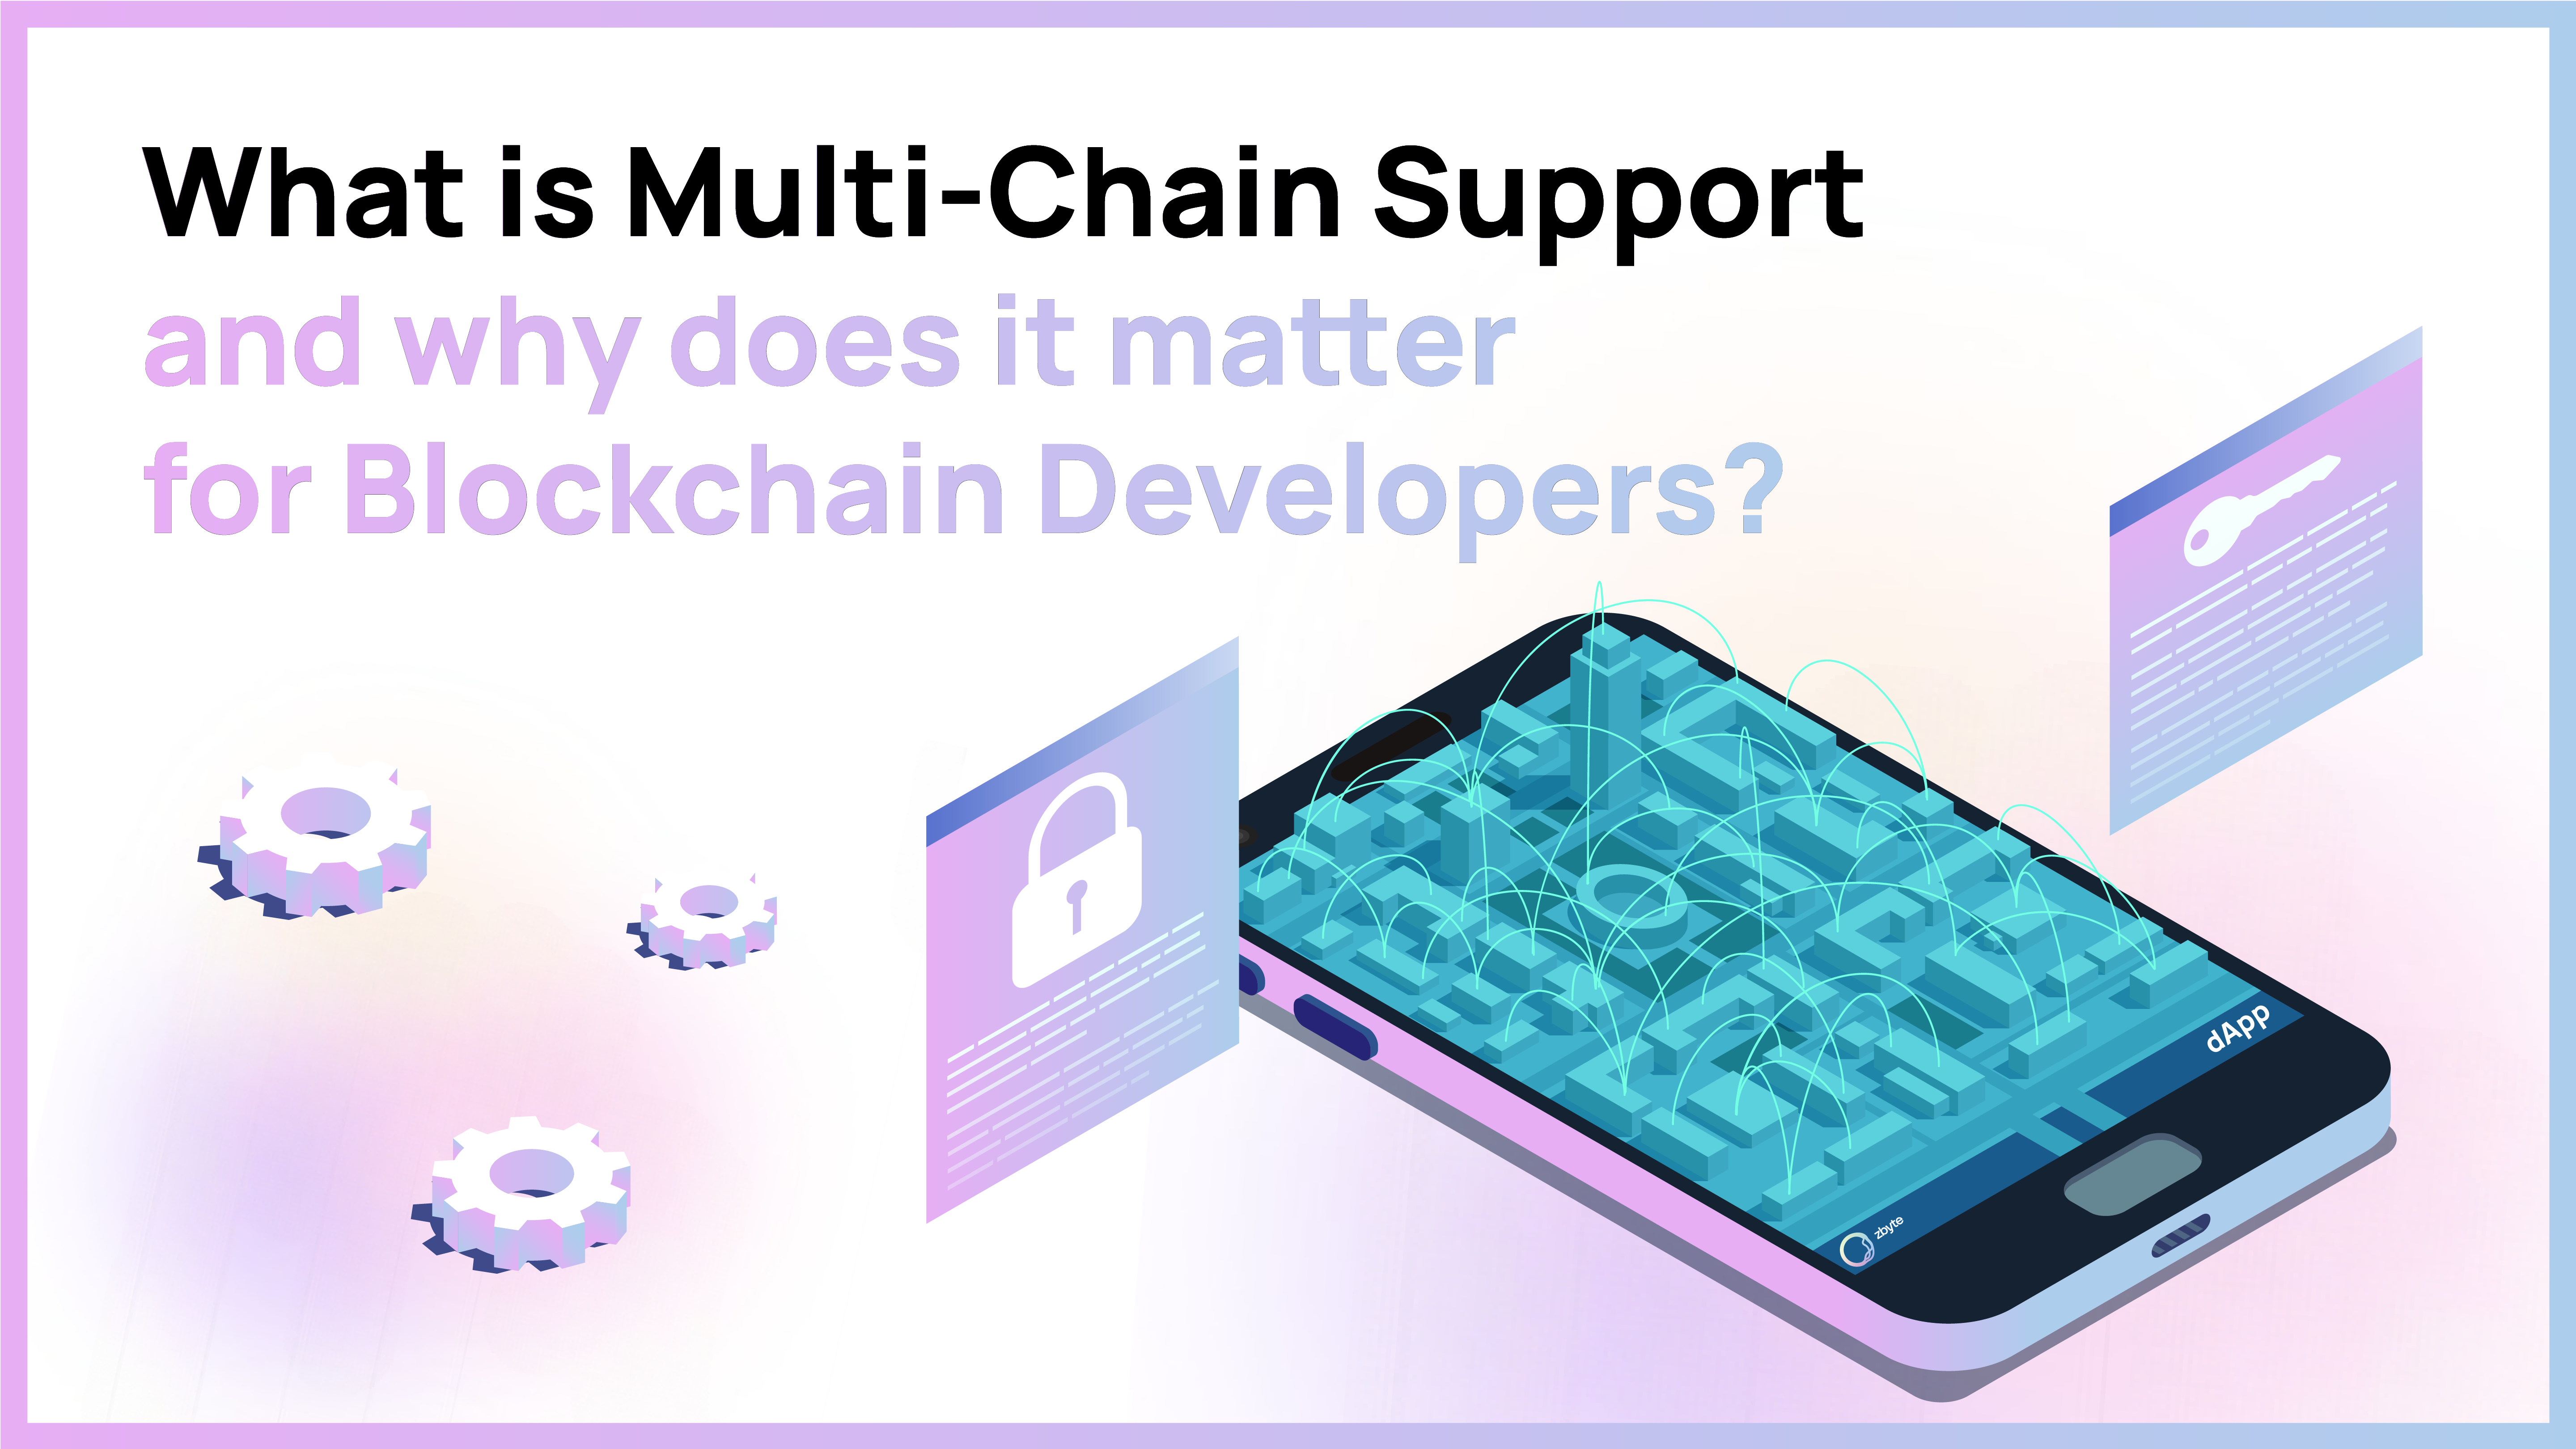 Multi-Chain Support for Blockchain Developers